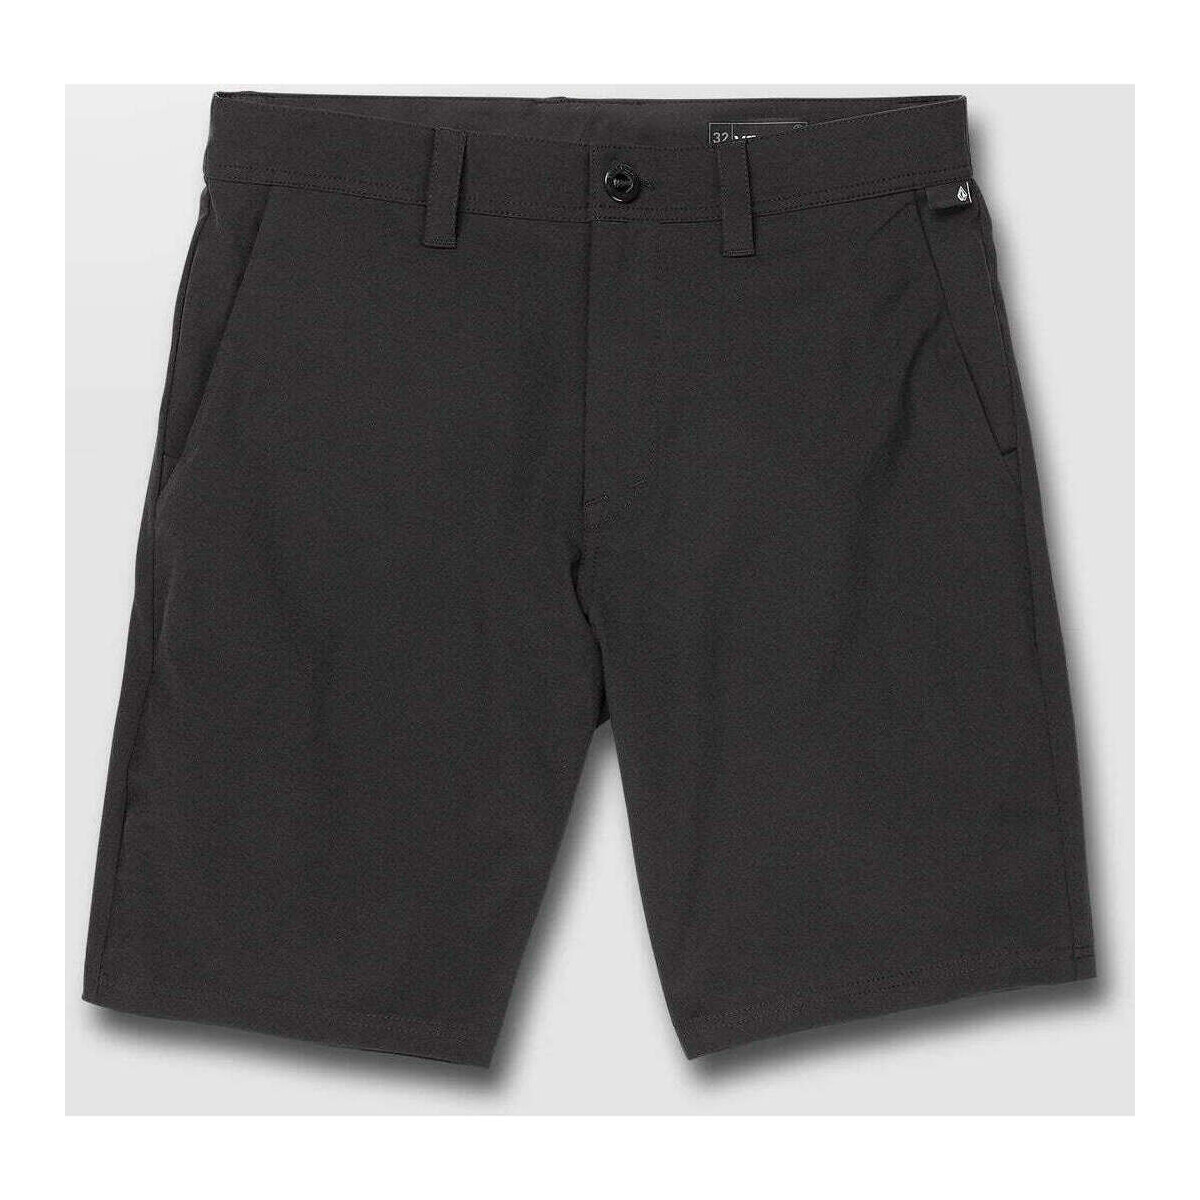 Vêtements Homme Shorts / Bermudas Volcom Frickin Cross Shred Shorts 20 Black Noir